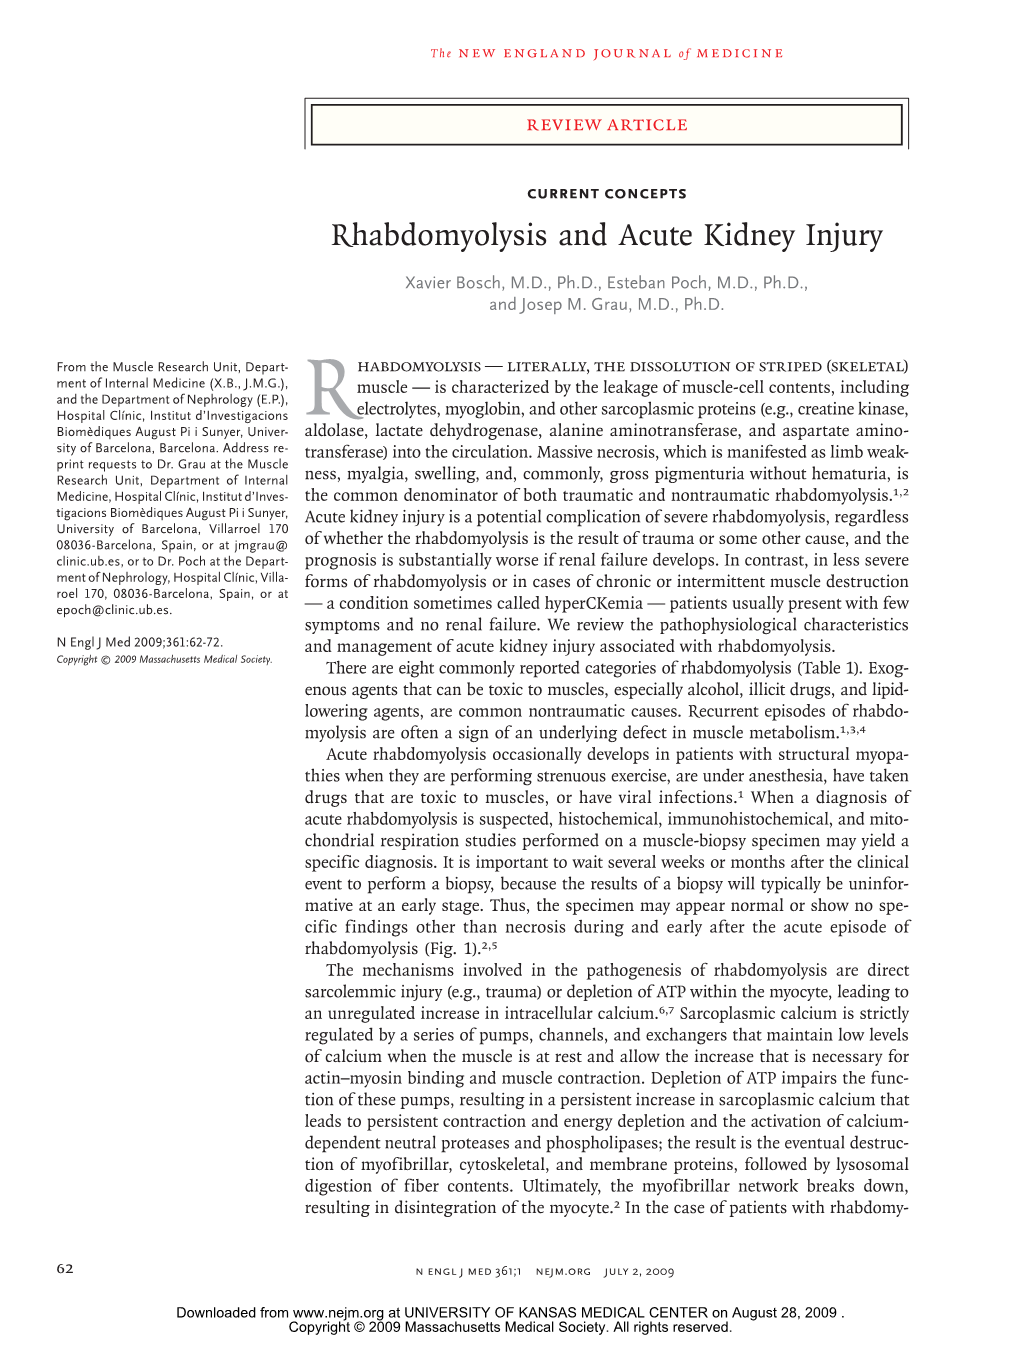 Rhabdomyolysis and Acute Kidney Injury